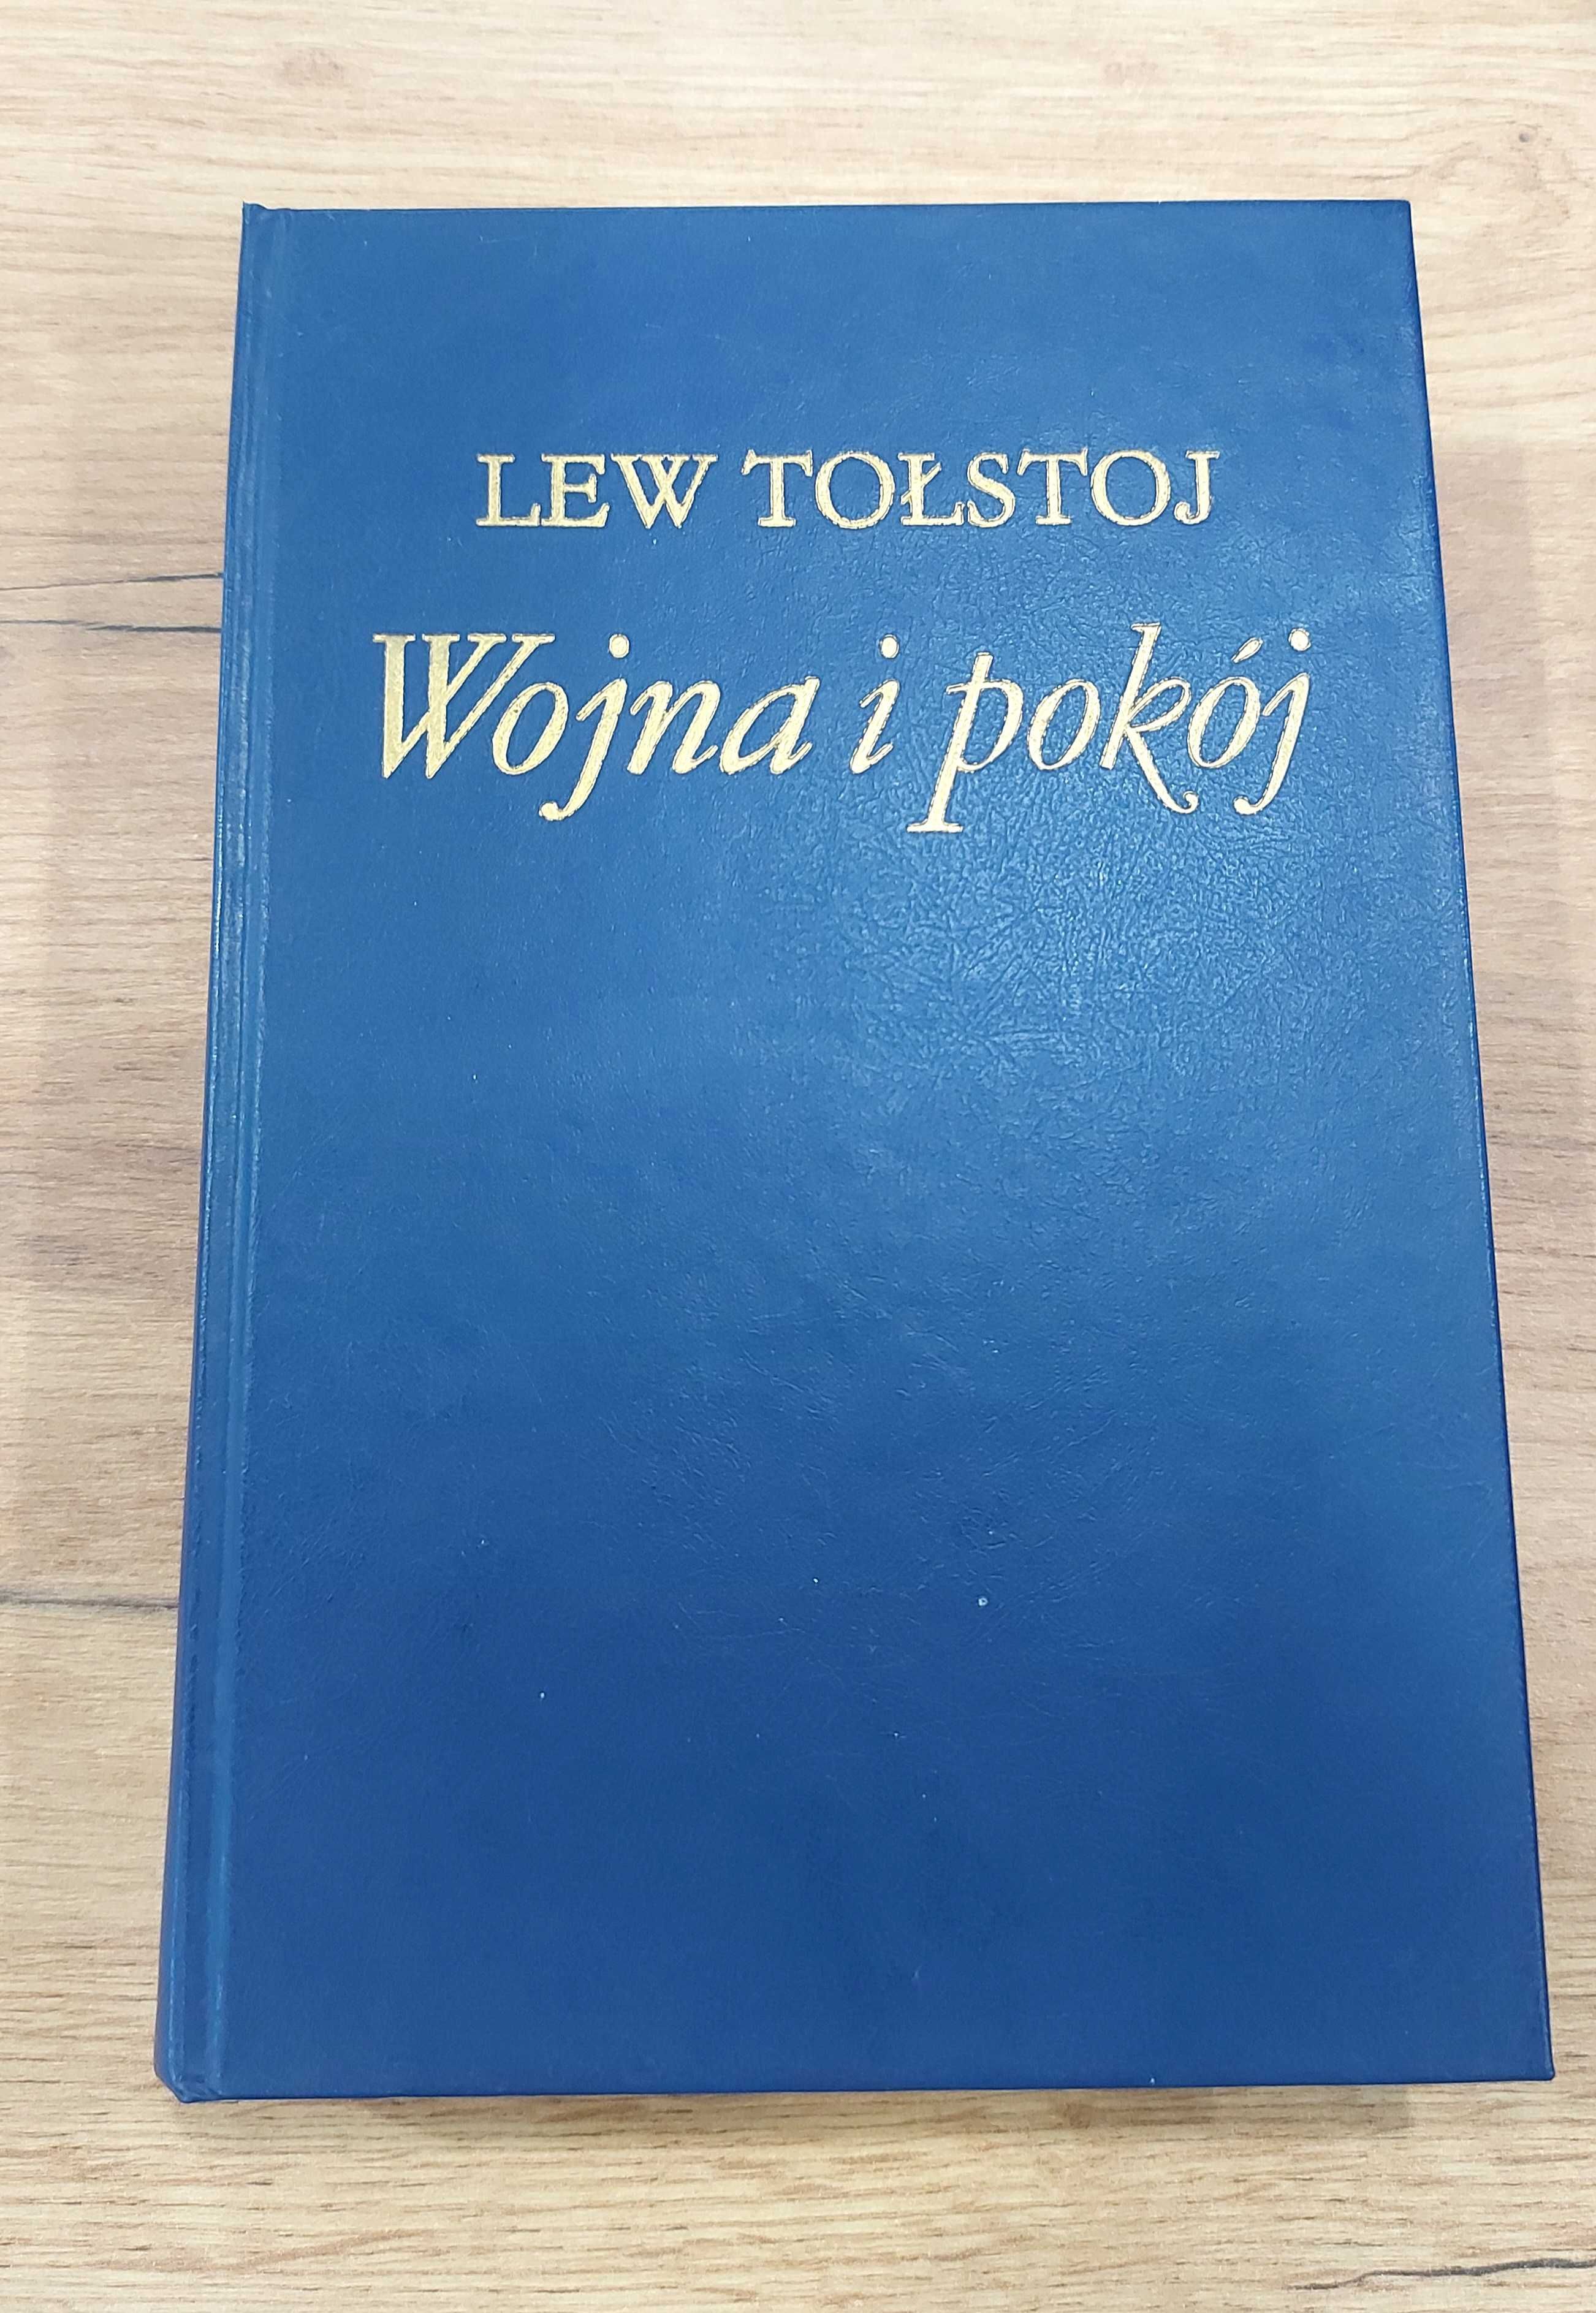 Książka  "Wojna i pokój" Lew Tołstoj